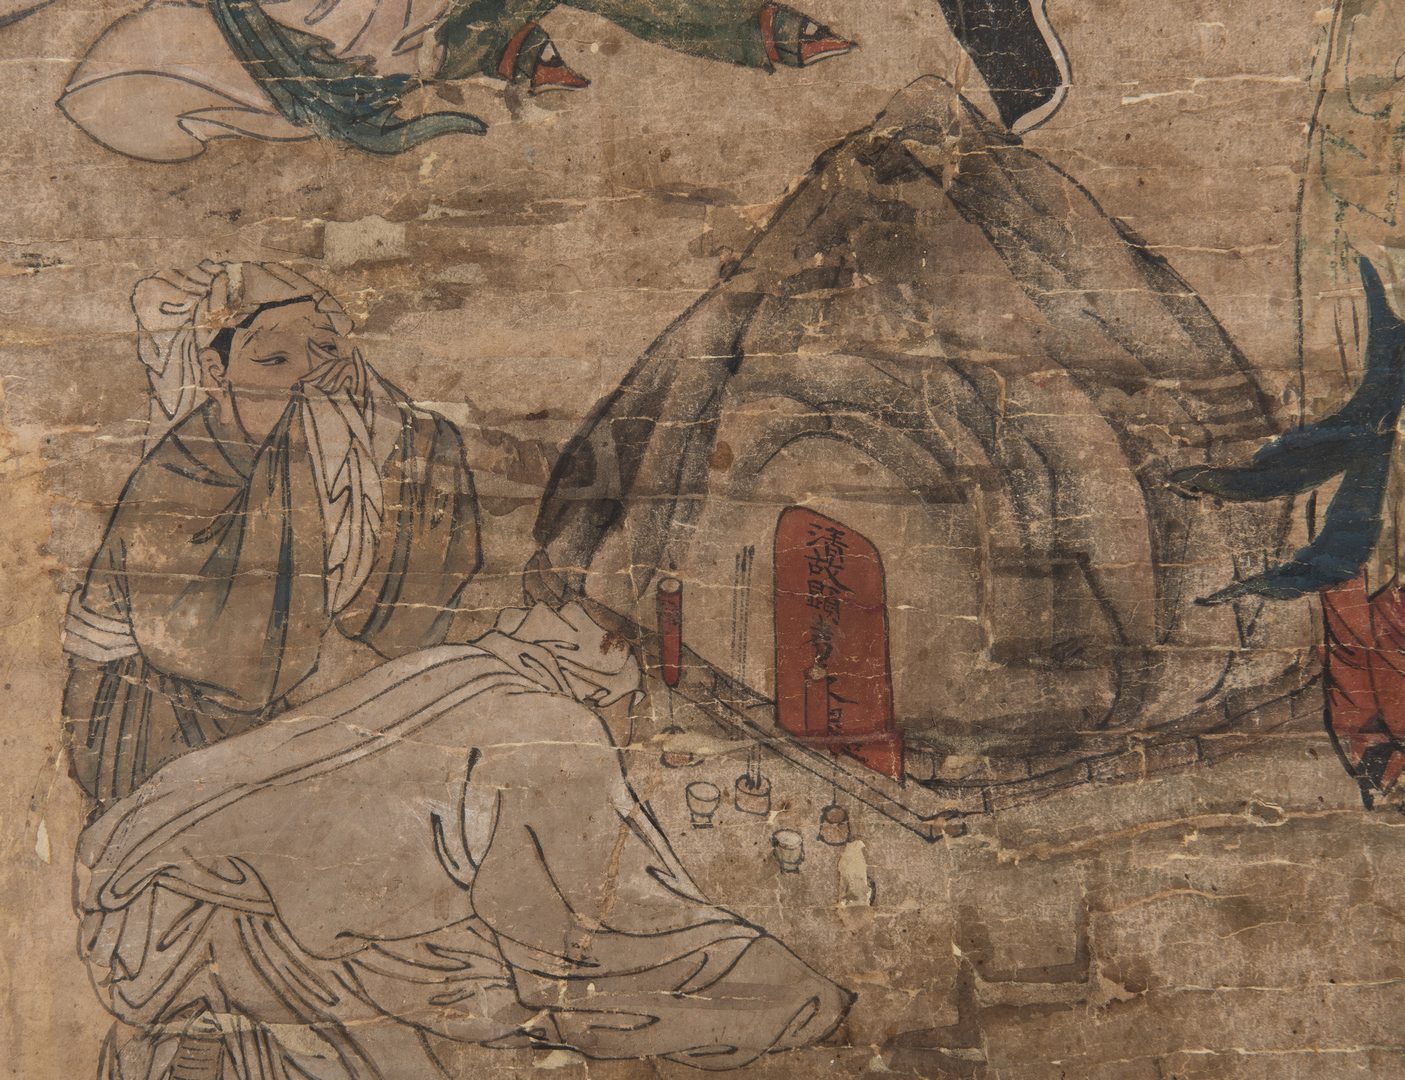 Lot 28: Two Framed Taoist Scrolls, Diyu (2nd pair)